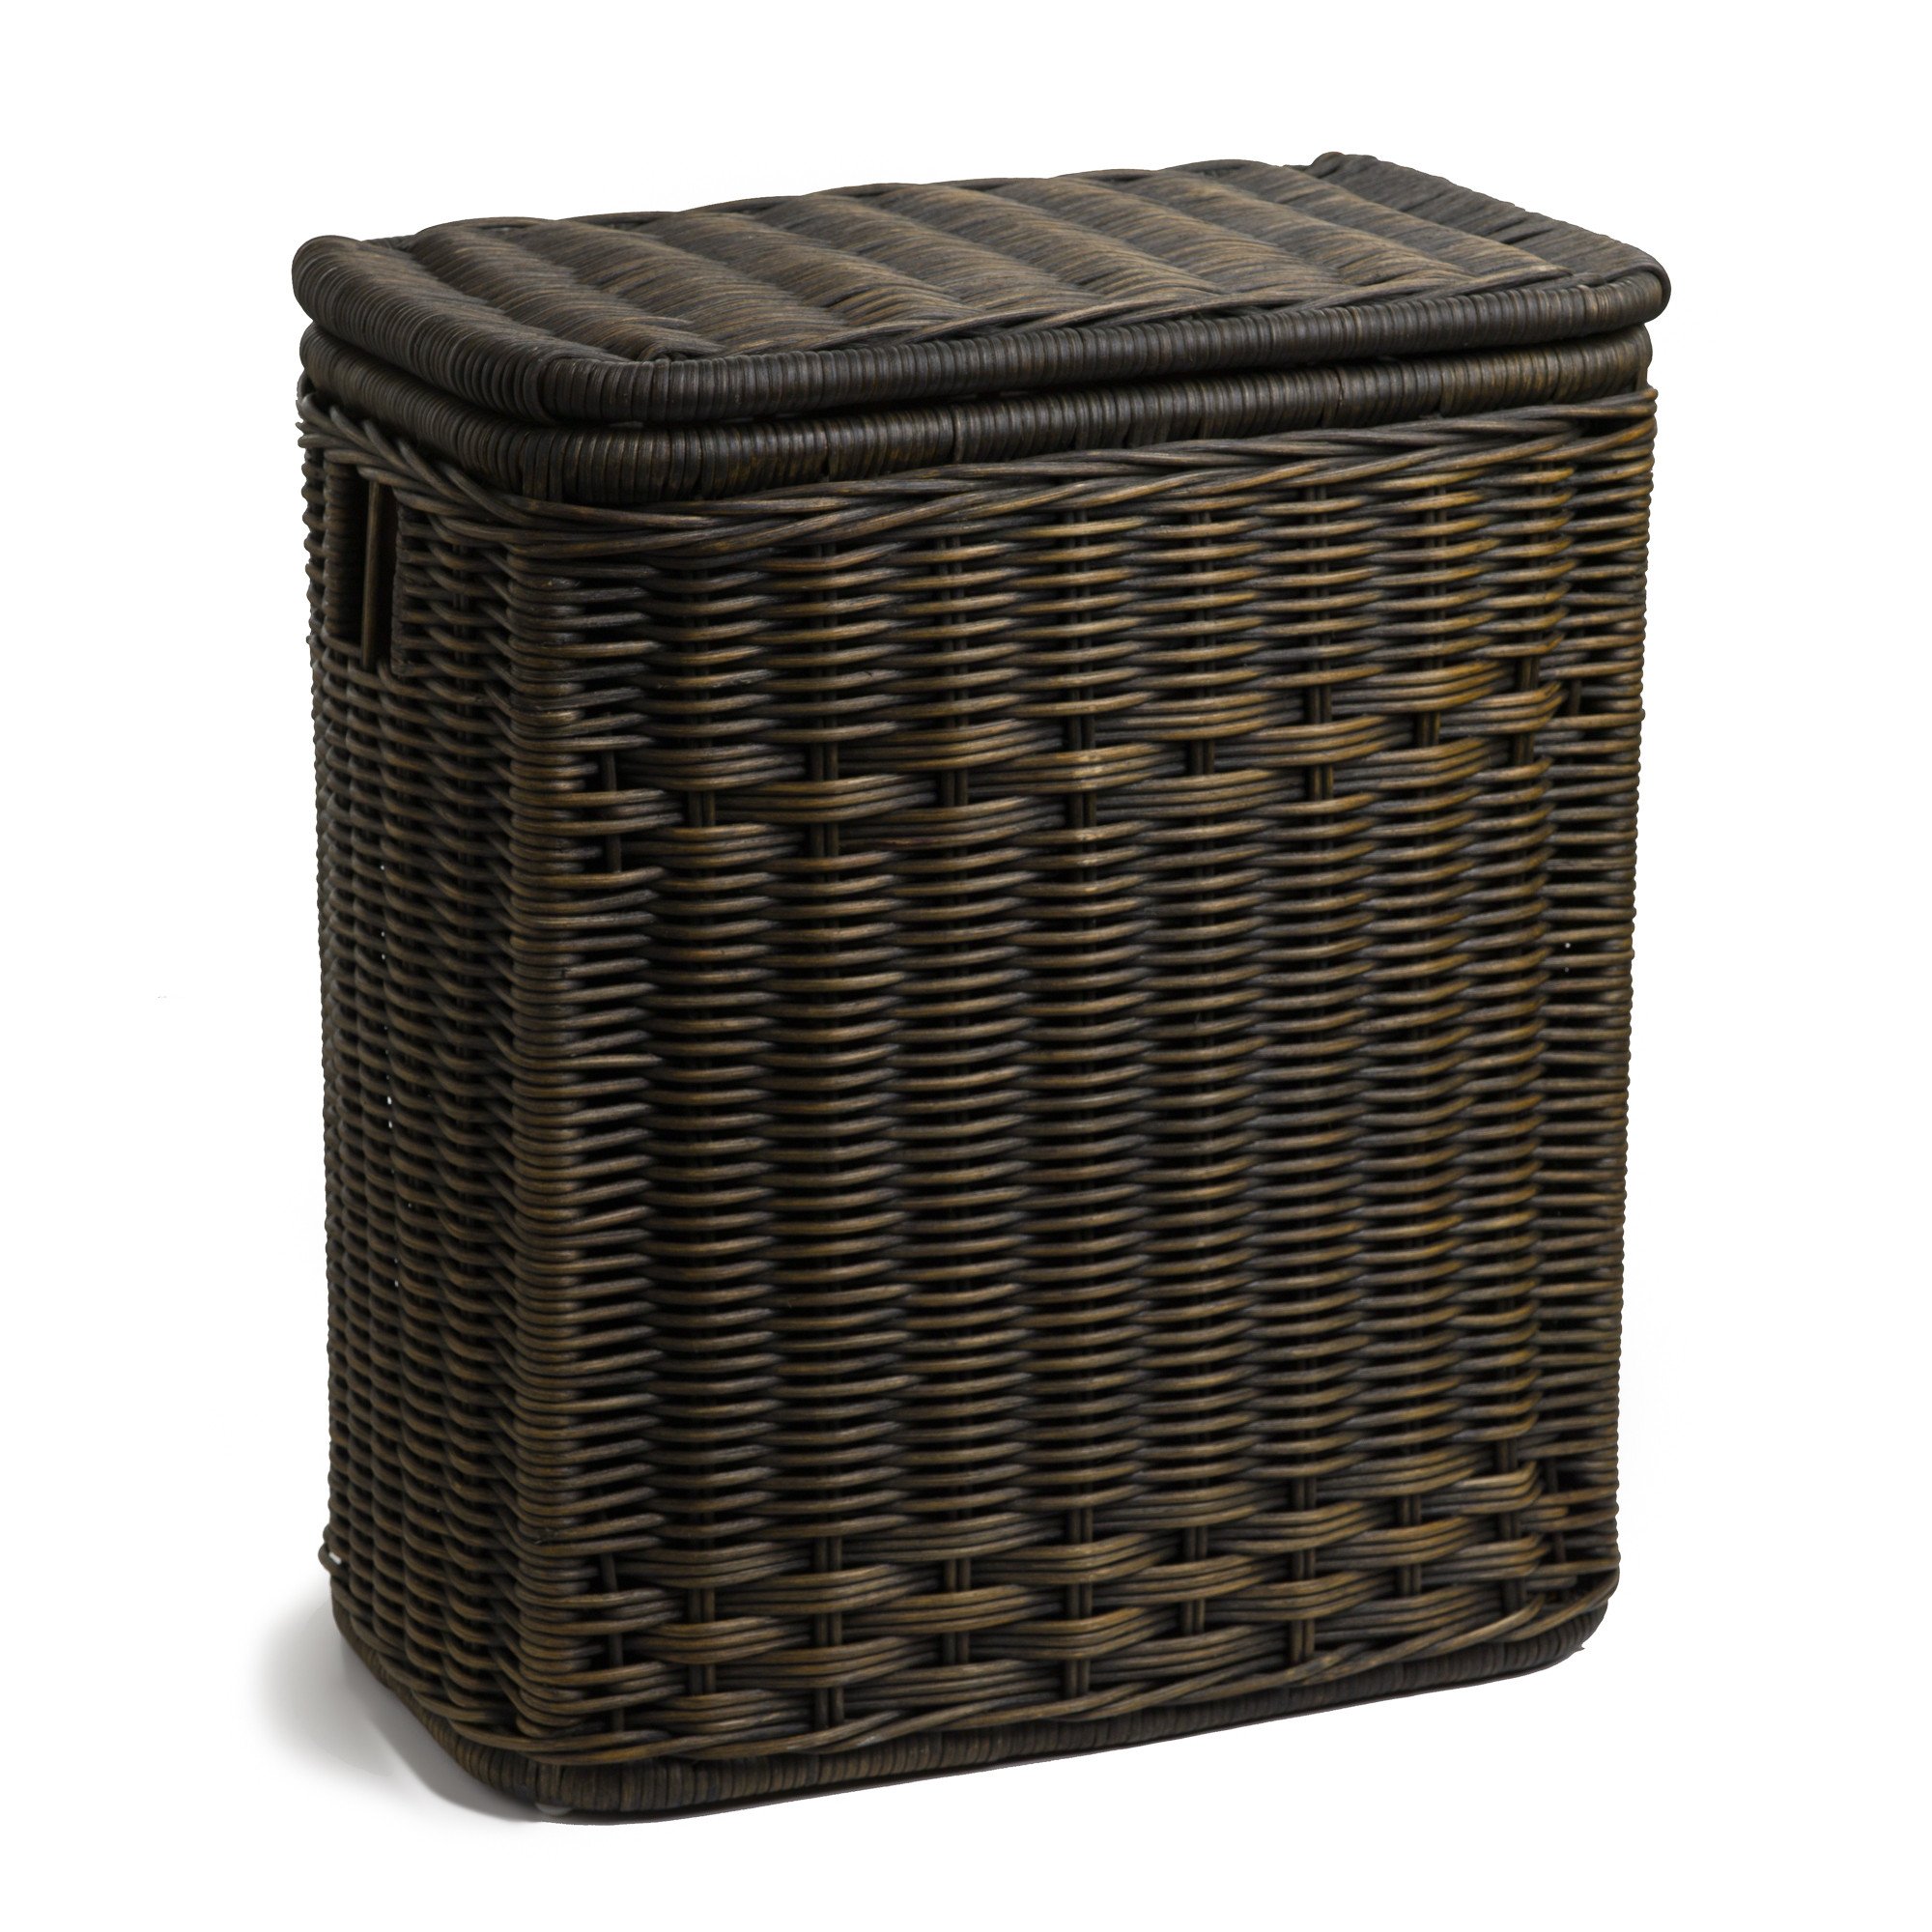 the wickerwork narrow rectangular wicker basket ... QBQEEPL